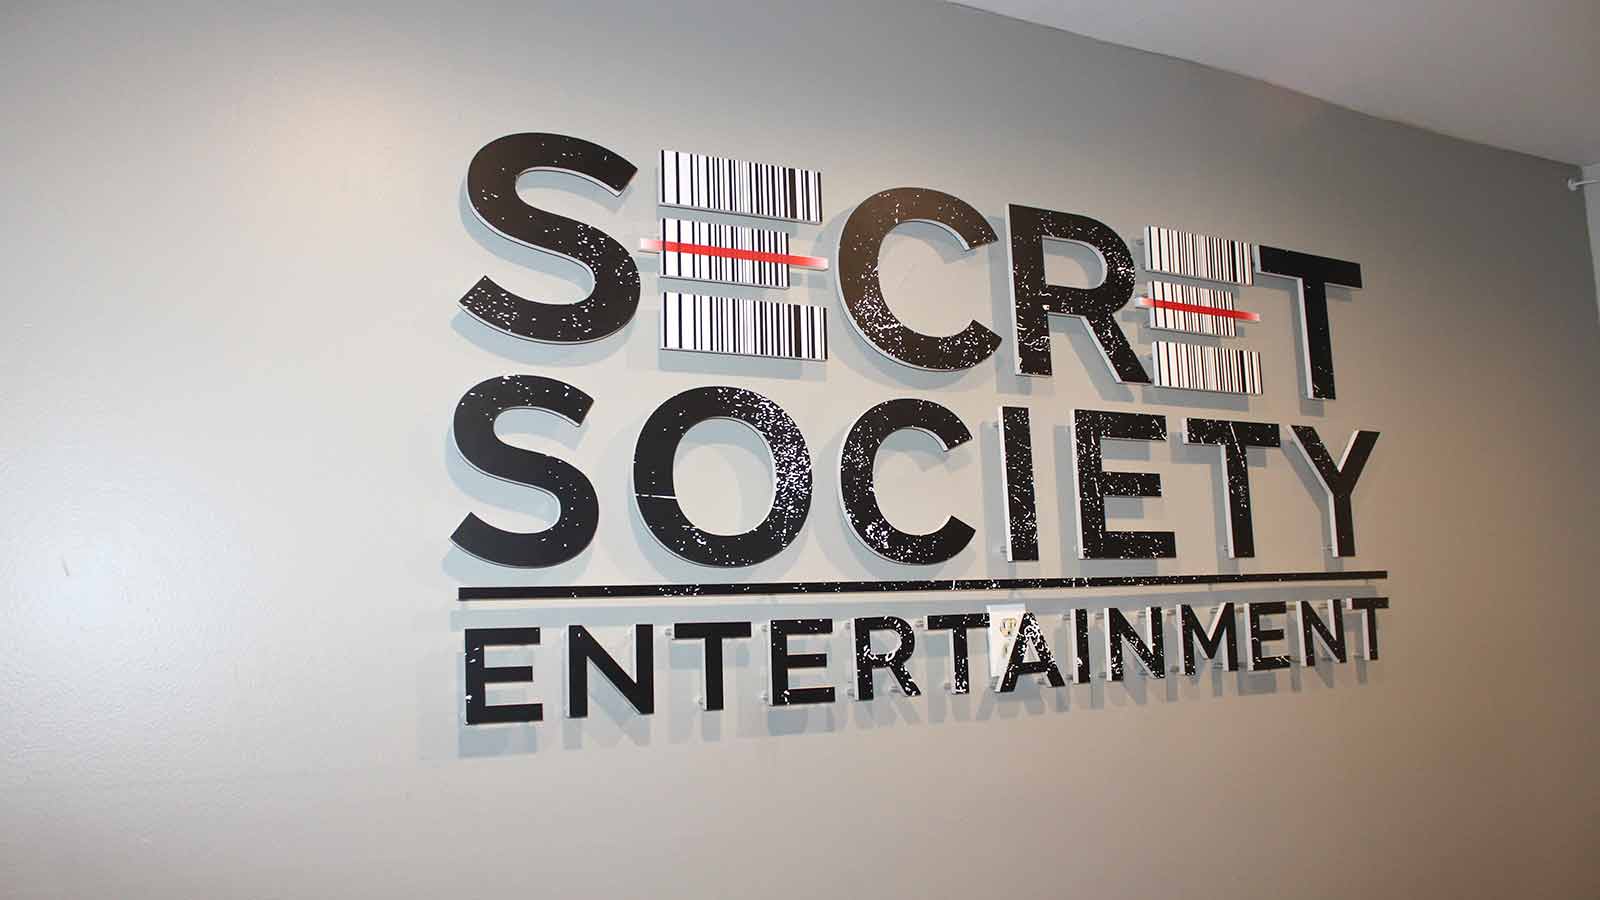 secret society indoor acrylic signs